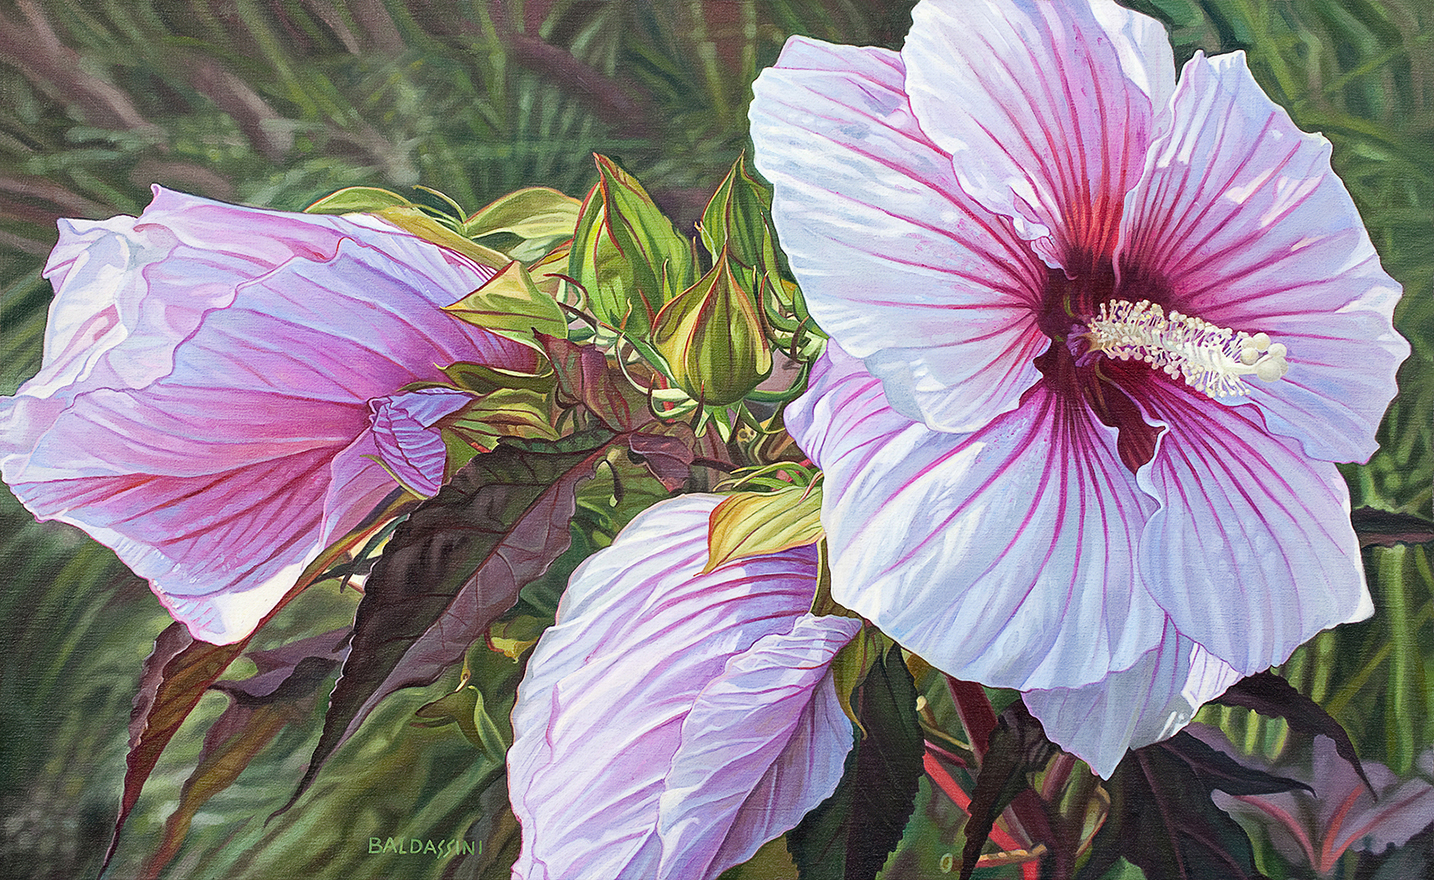 baldassini-floral-flower-garden-oil-painting-hibiscus